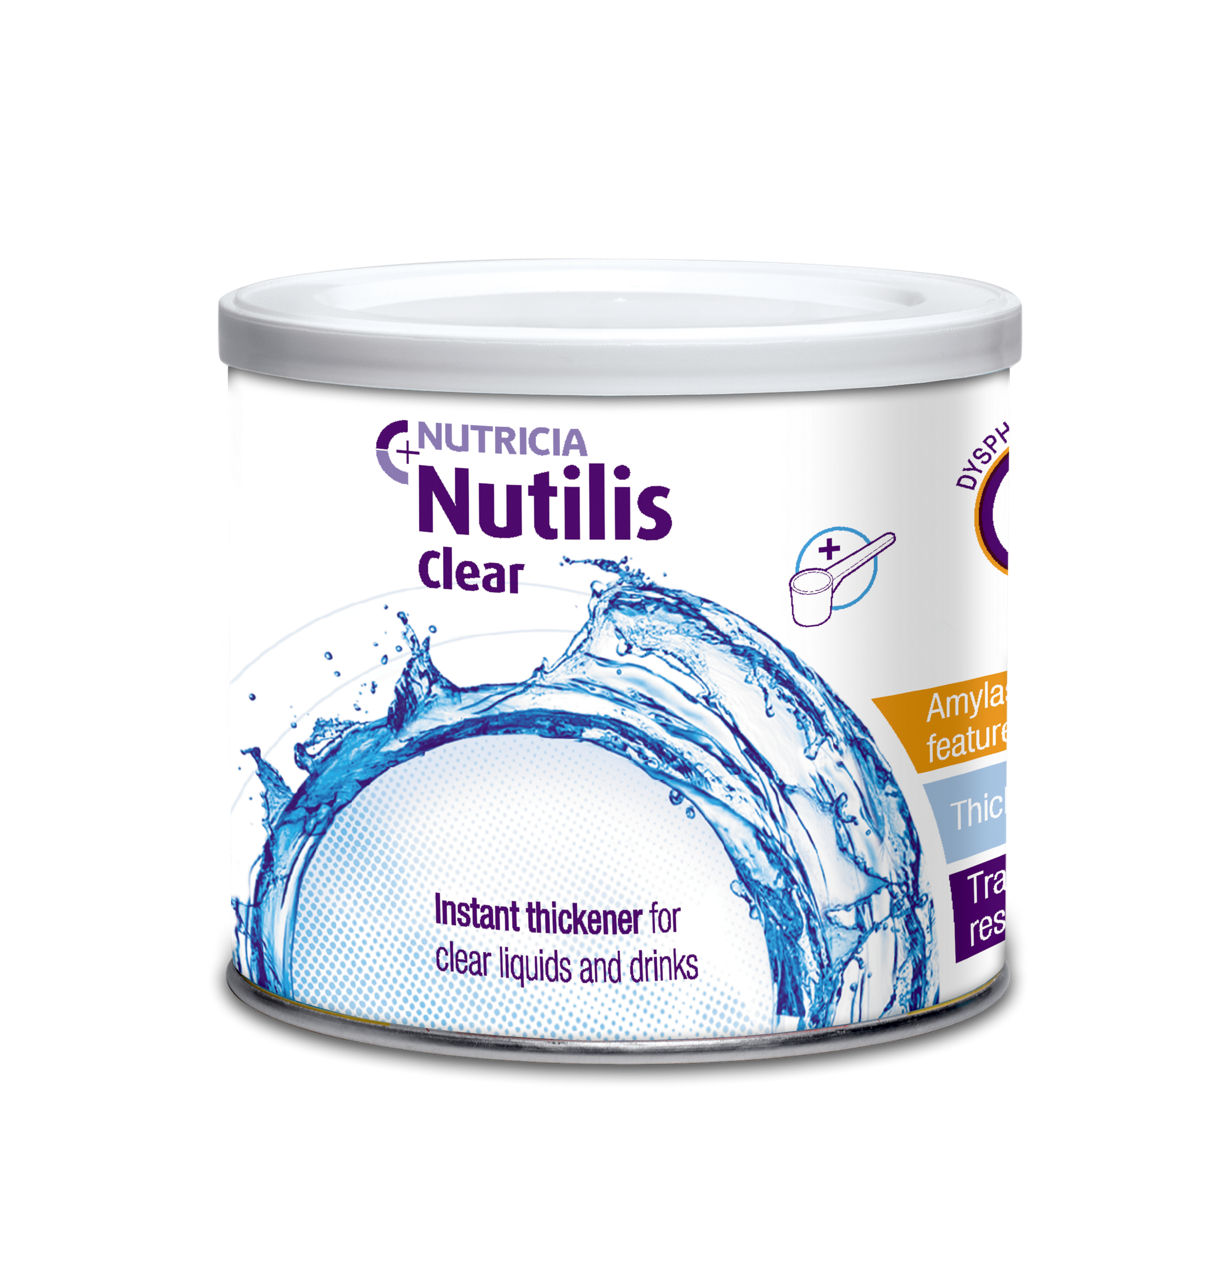 Nutilis Clear packshot